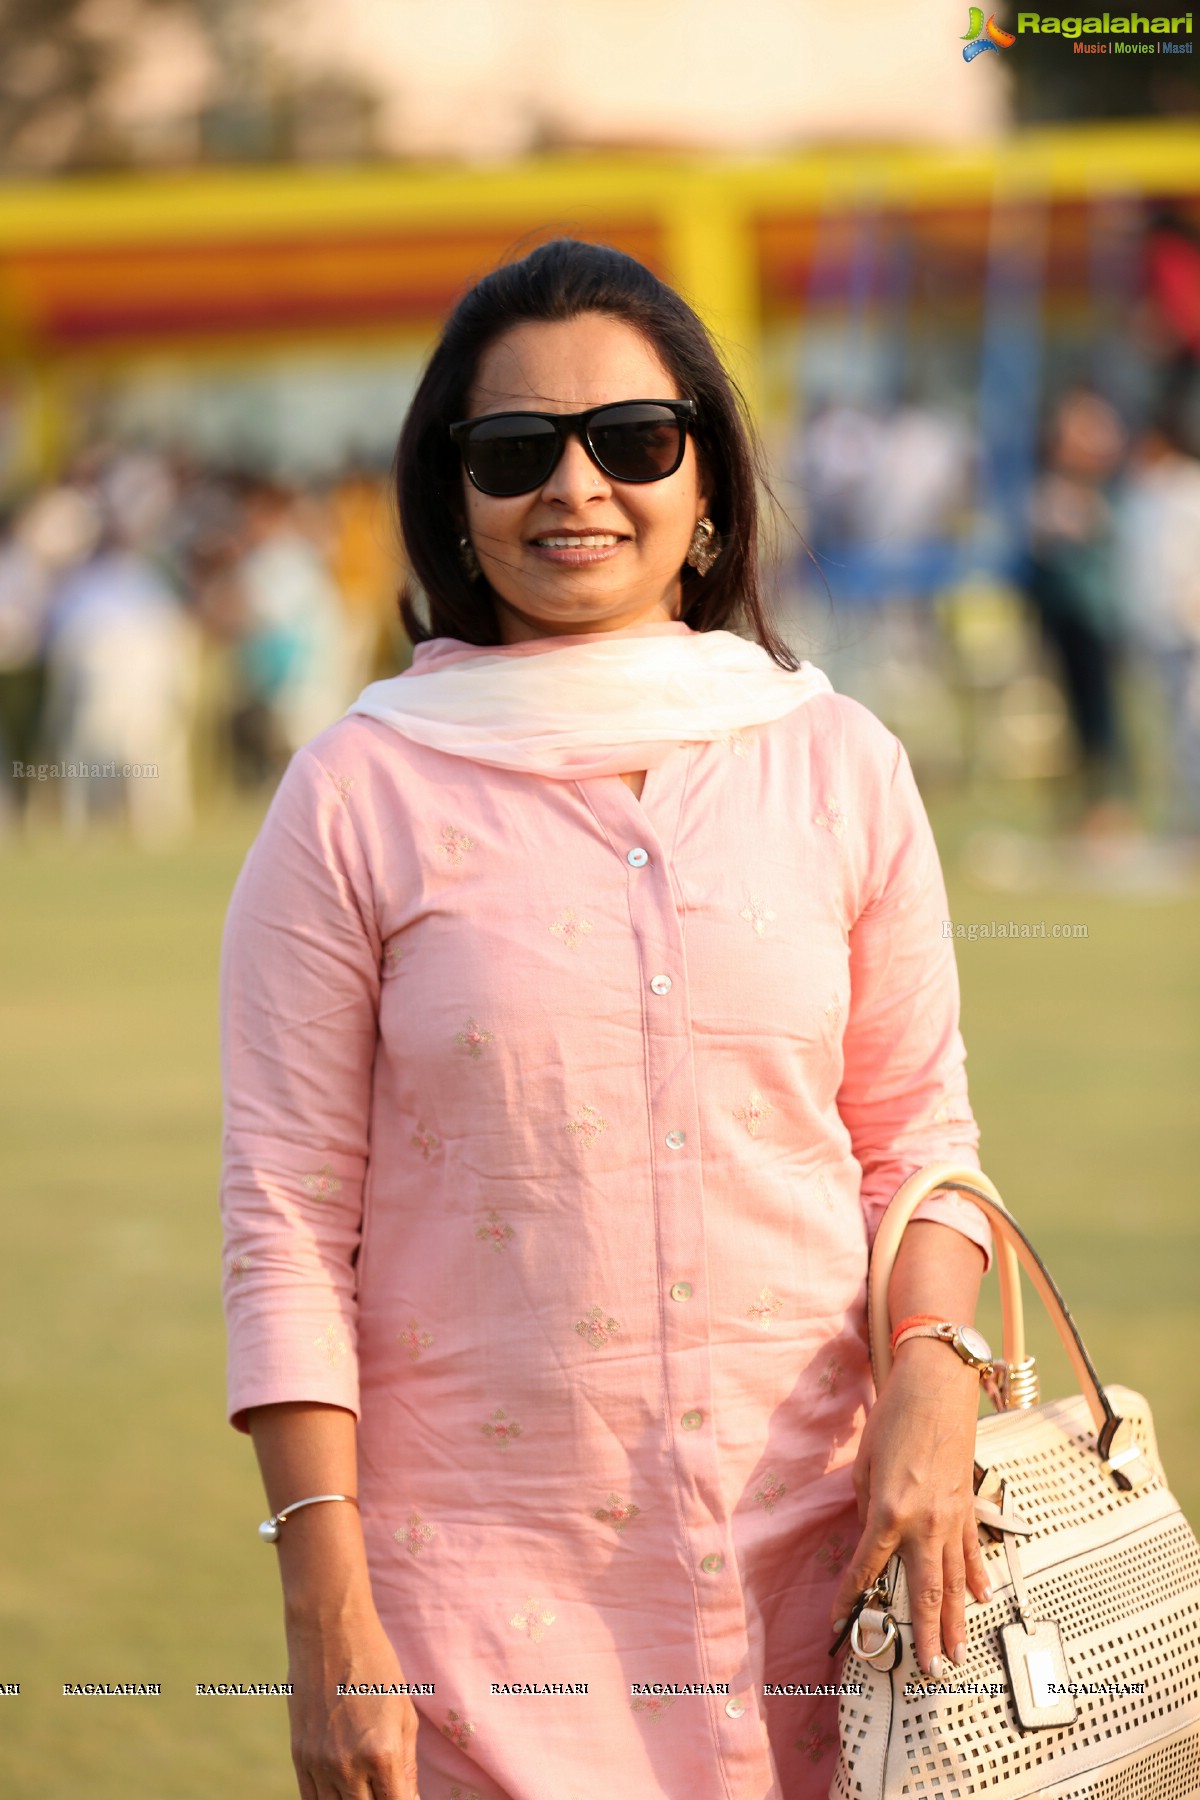 Samanvay Ladies Club Kai Po Che at Vijay Anand Cricket Ground